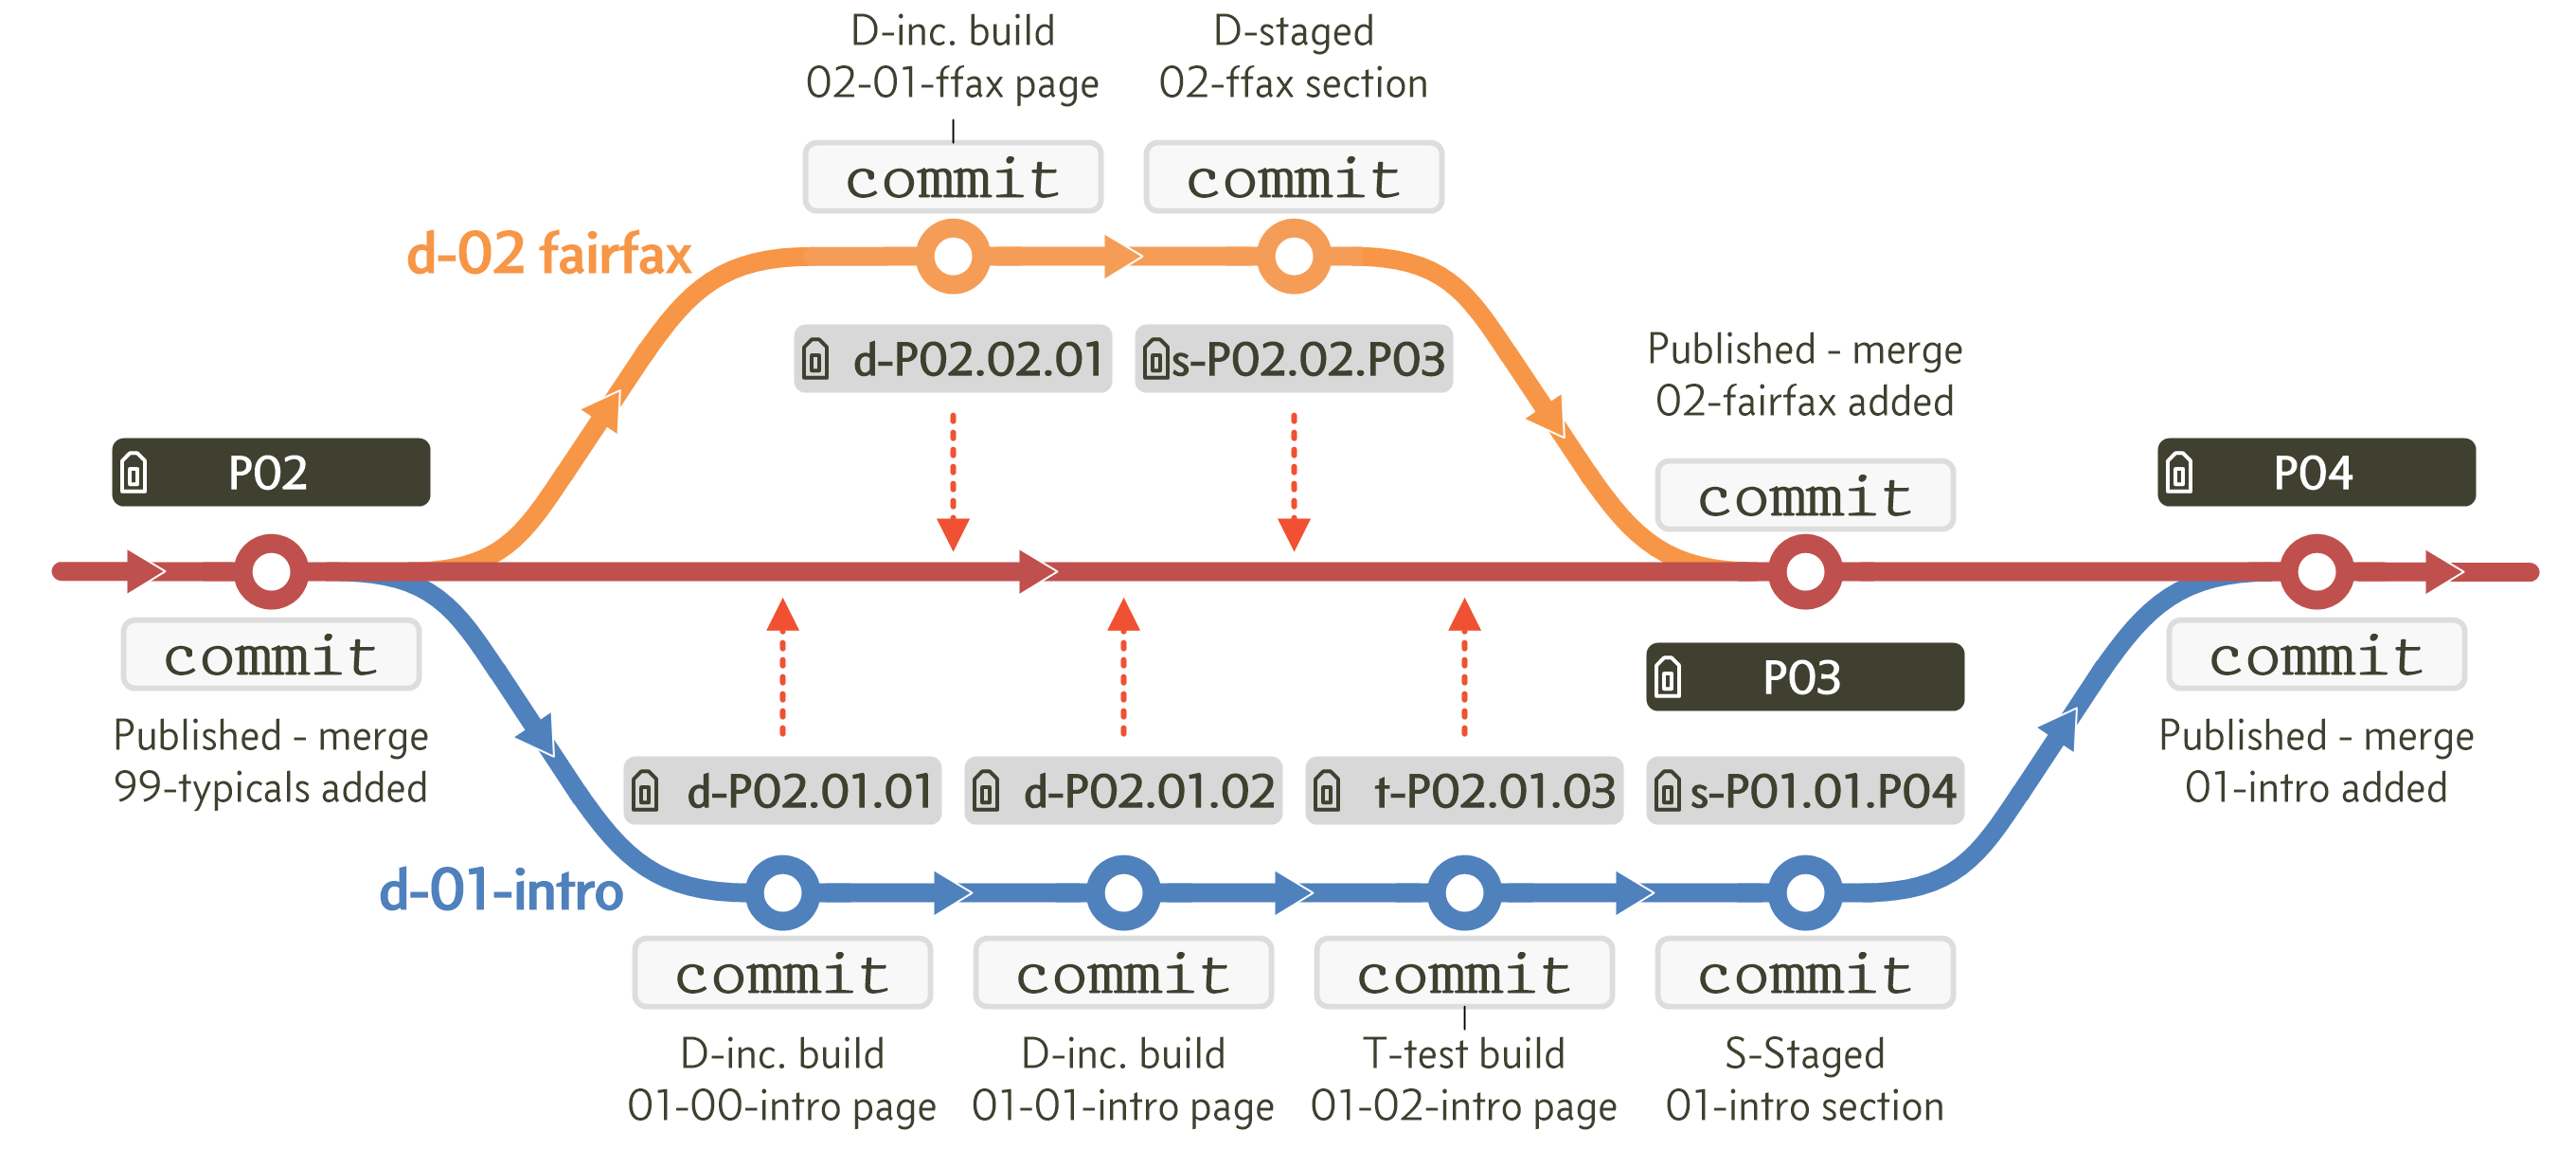 Figure B.3 - Parallel development branches